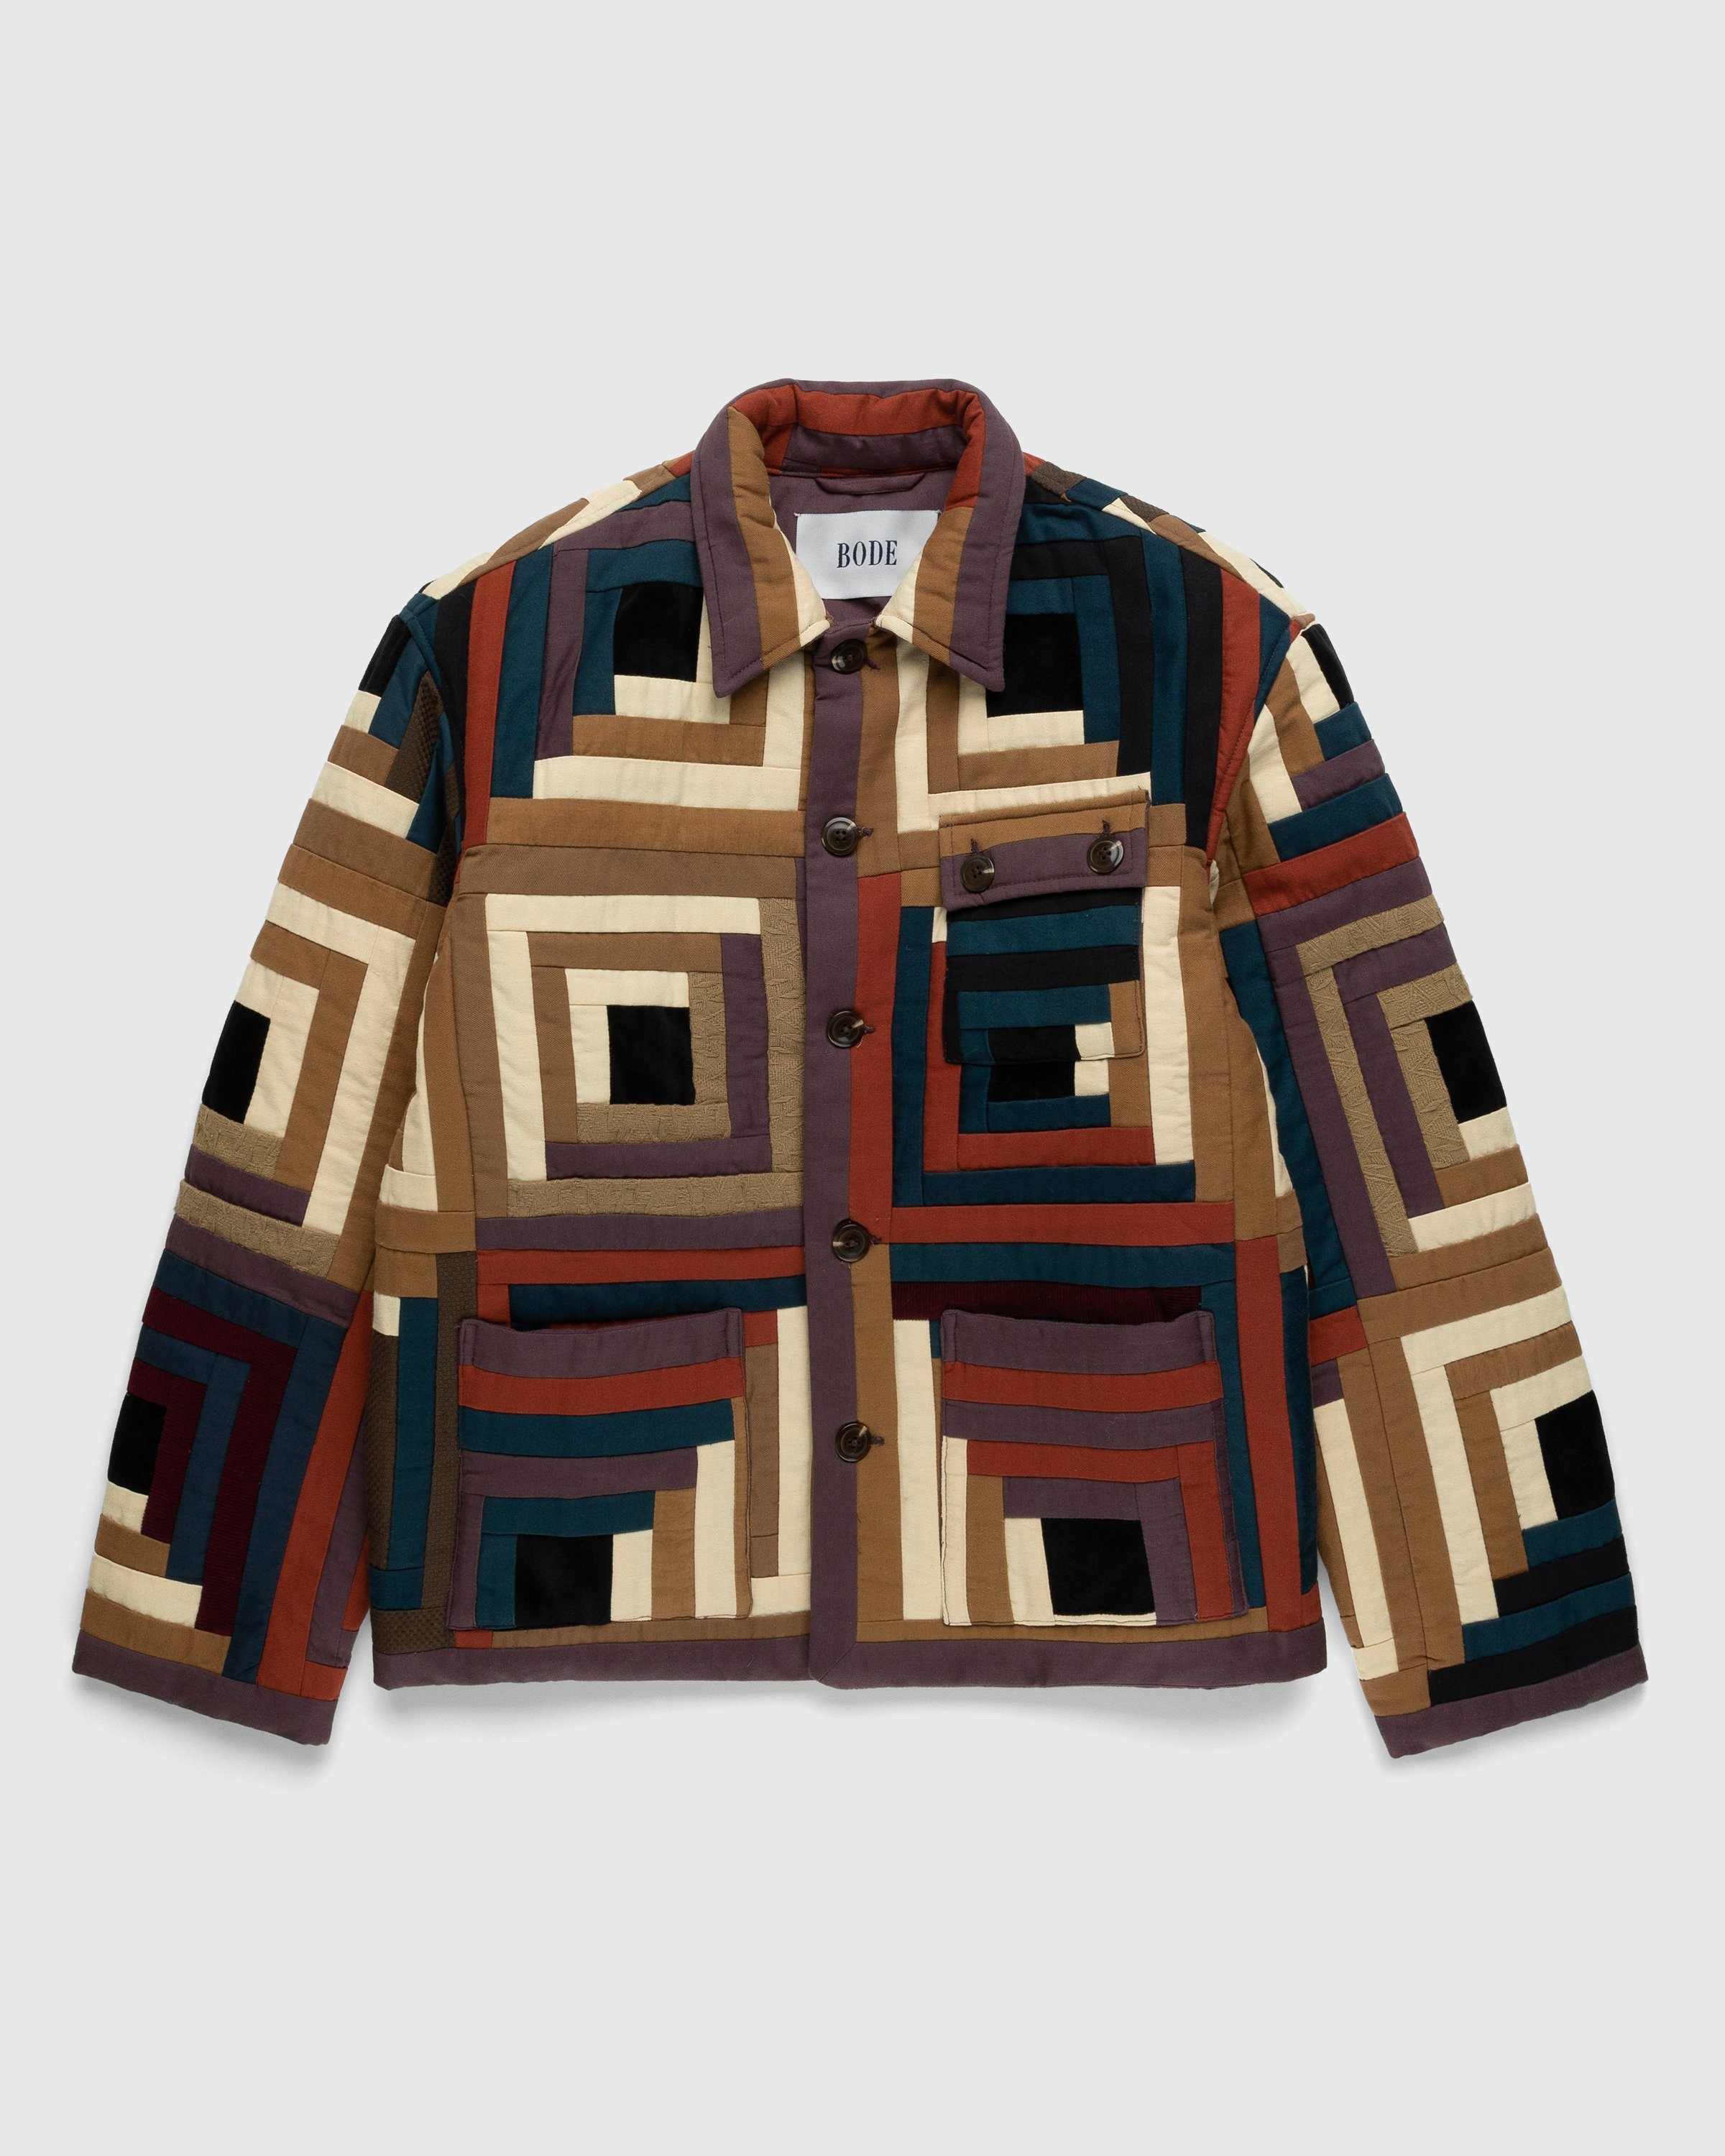 Bode – Log Cabin Quilted Workwear Jacket Multi | Highsnobiety Shop